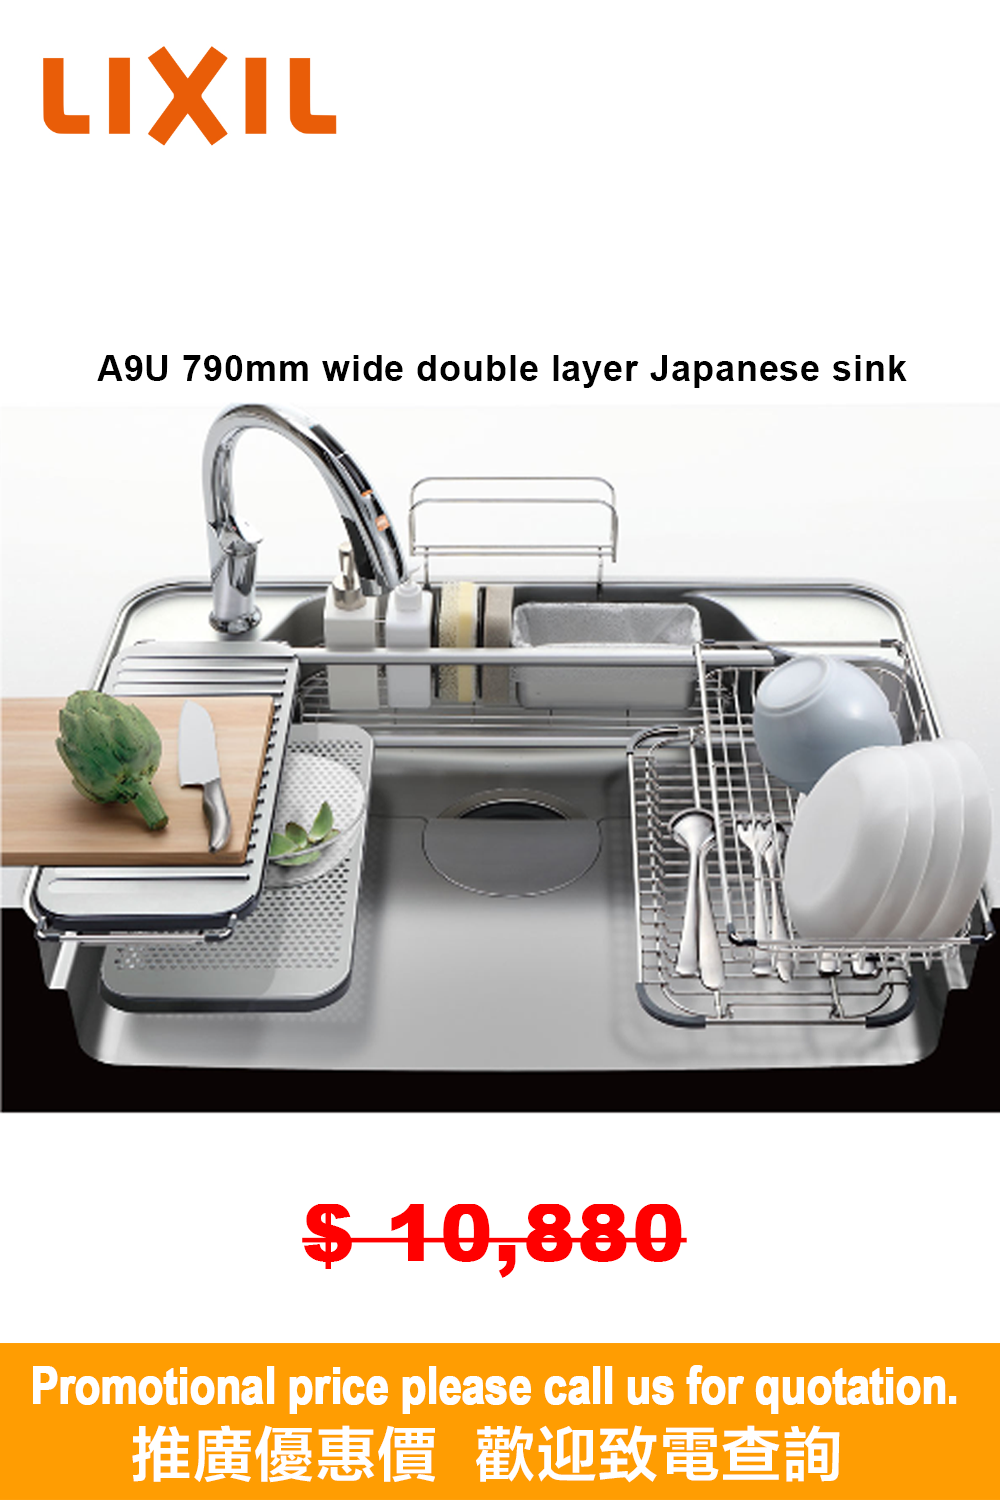 LIXIL A9U 790mm Japanese 2-Levels Multi-functional Silence Sink 日本LIXI